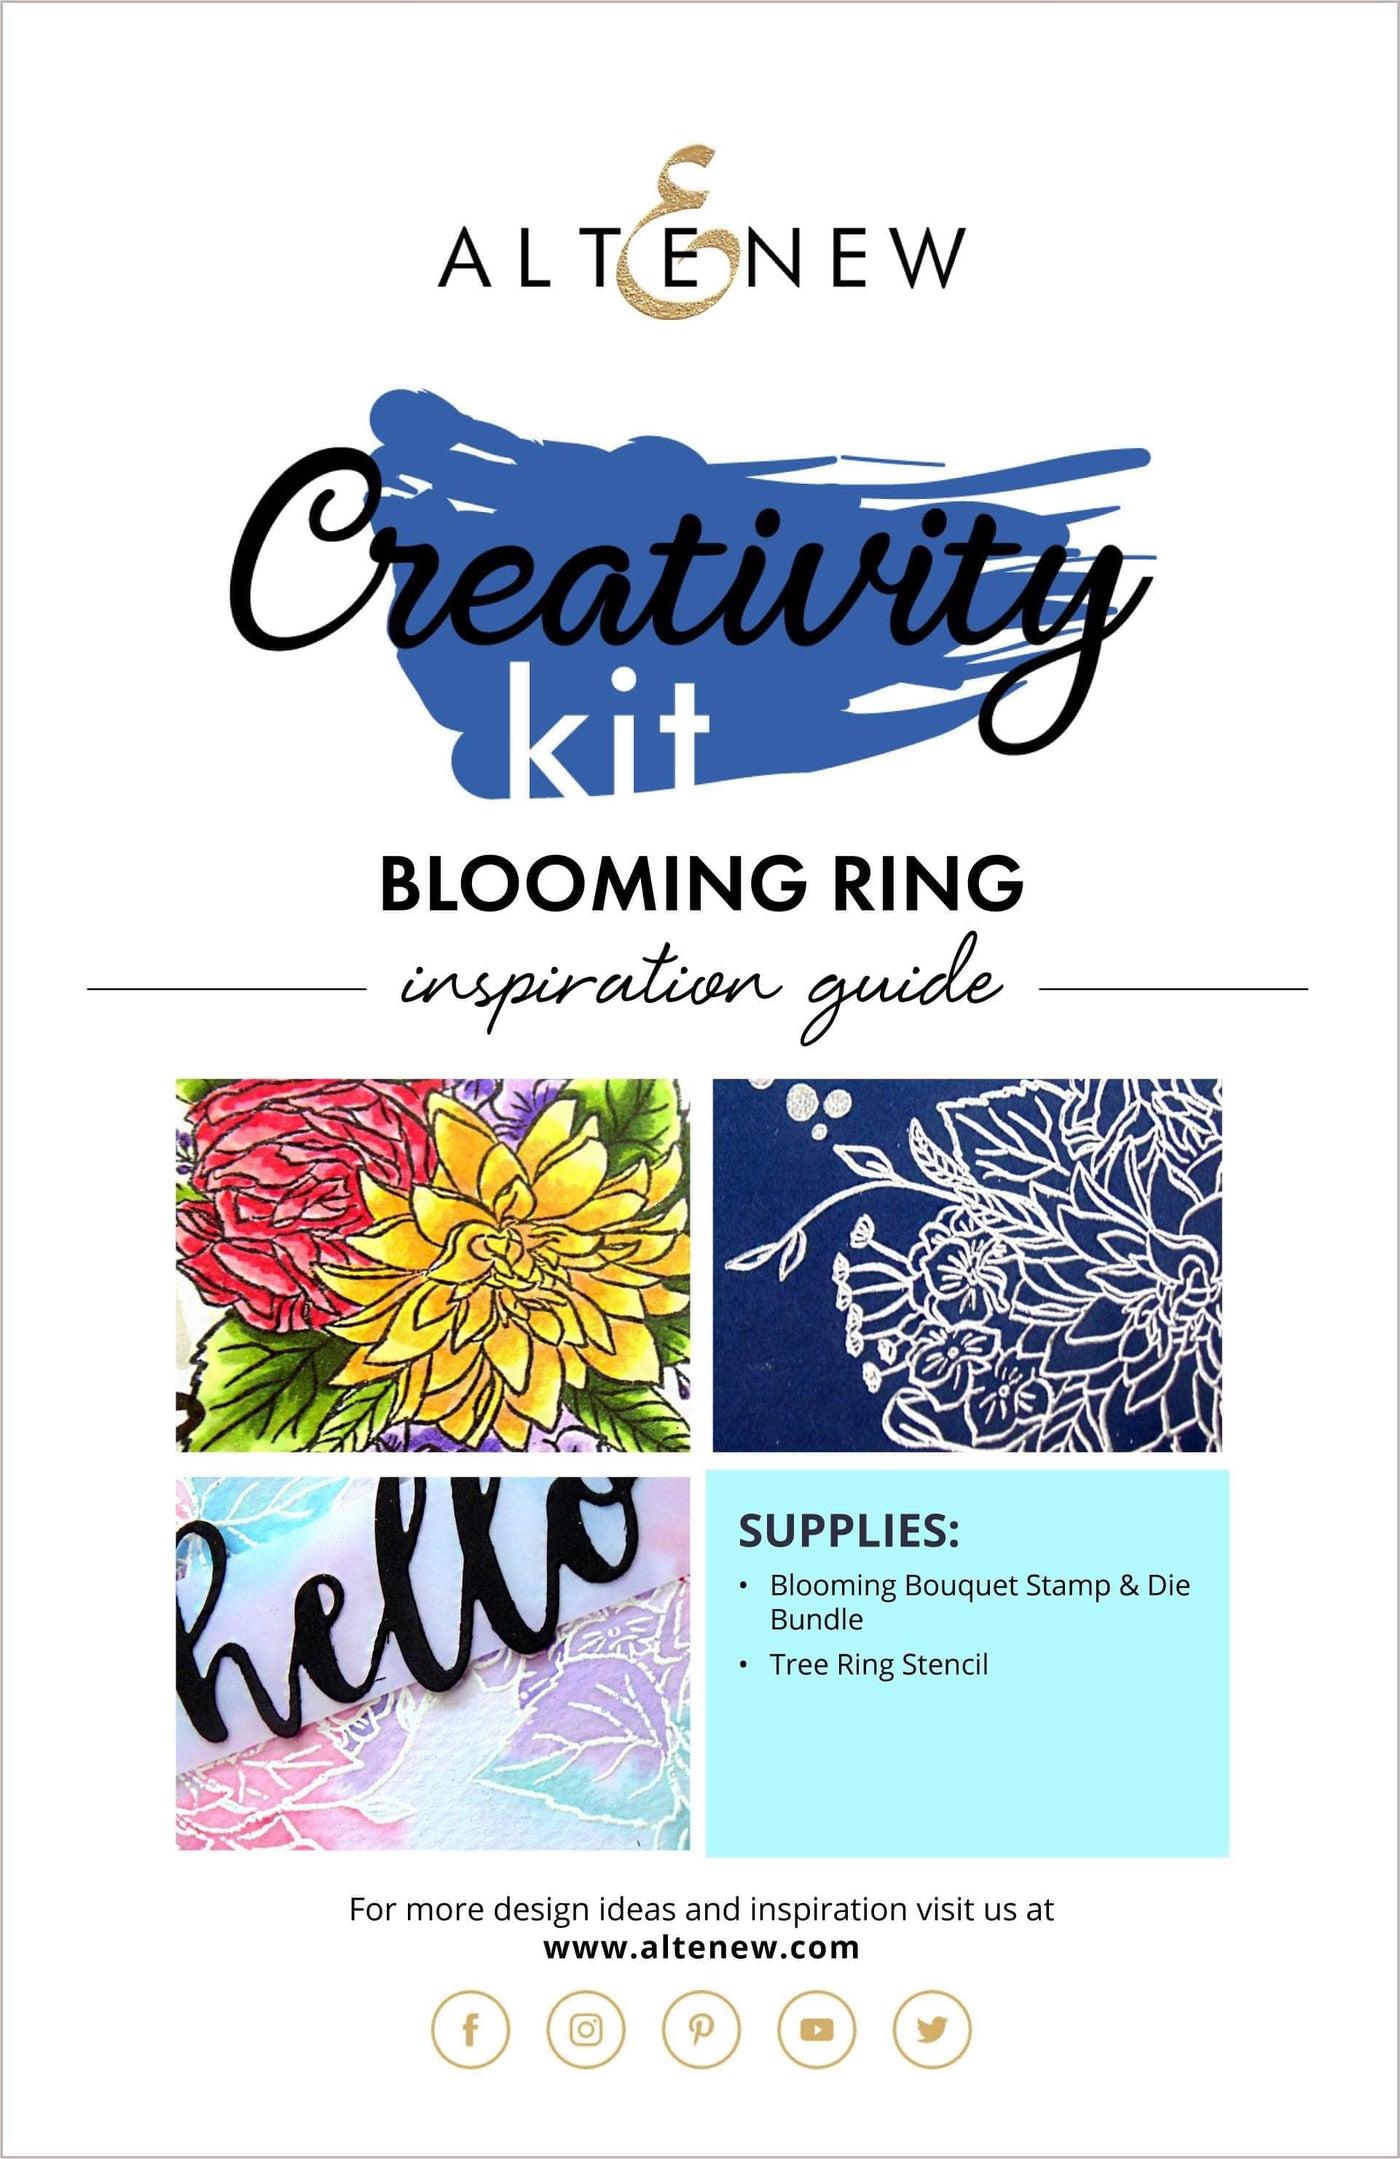 Printed Media Blooming Ring Creativity Kit Inspiration Guide